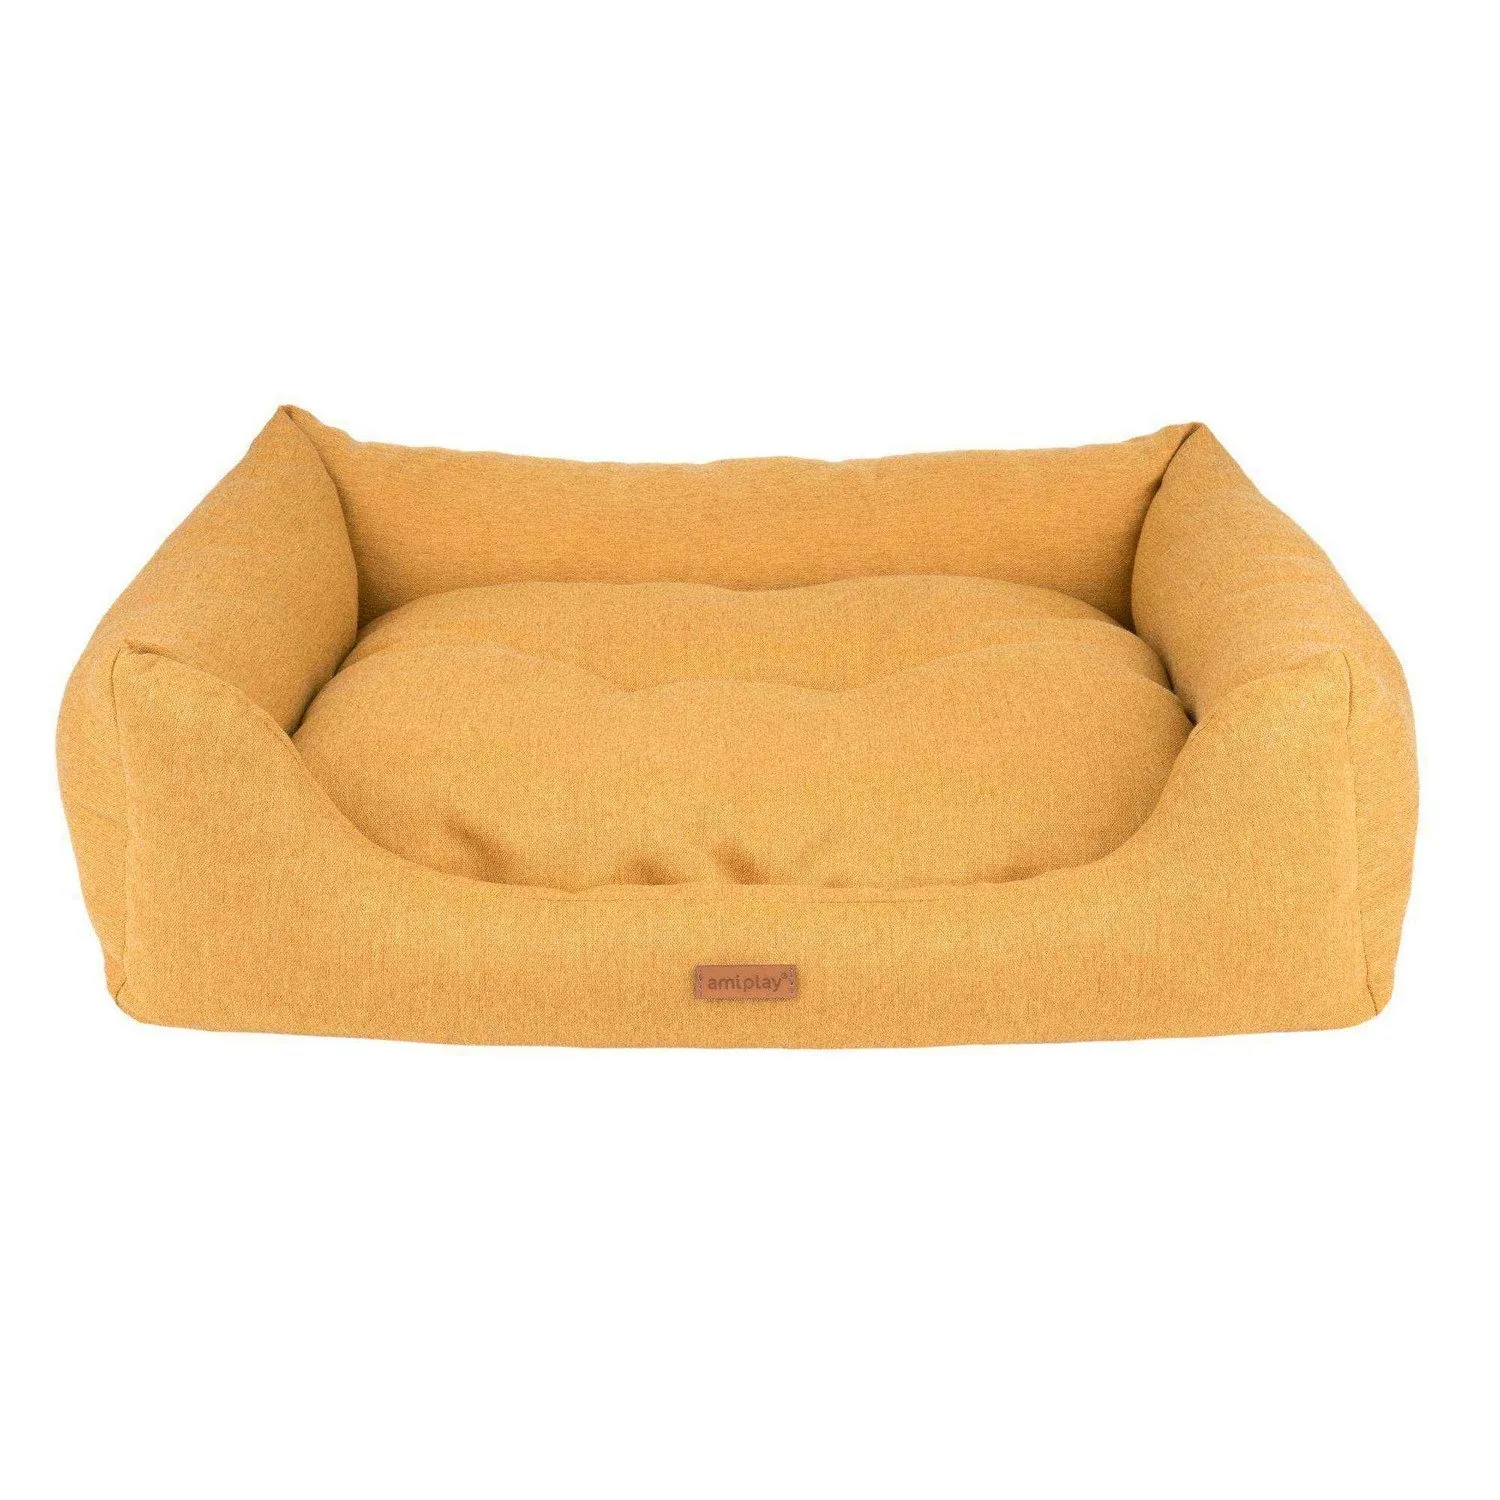 Amiplay Sofa Montana S - Елегантно легло за кучета и котки, 58x46x17 см. - жълто